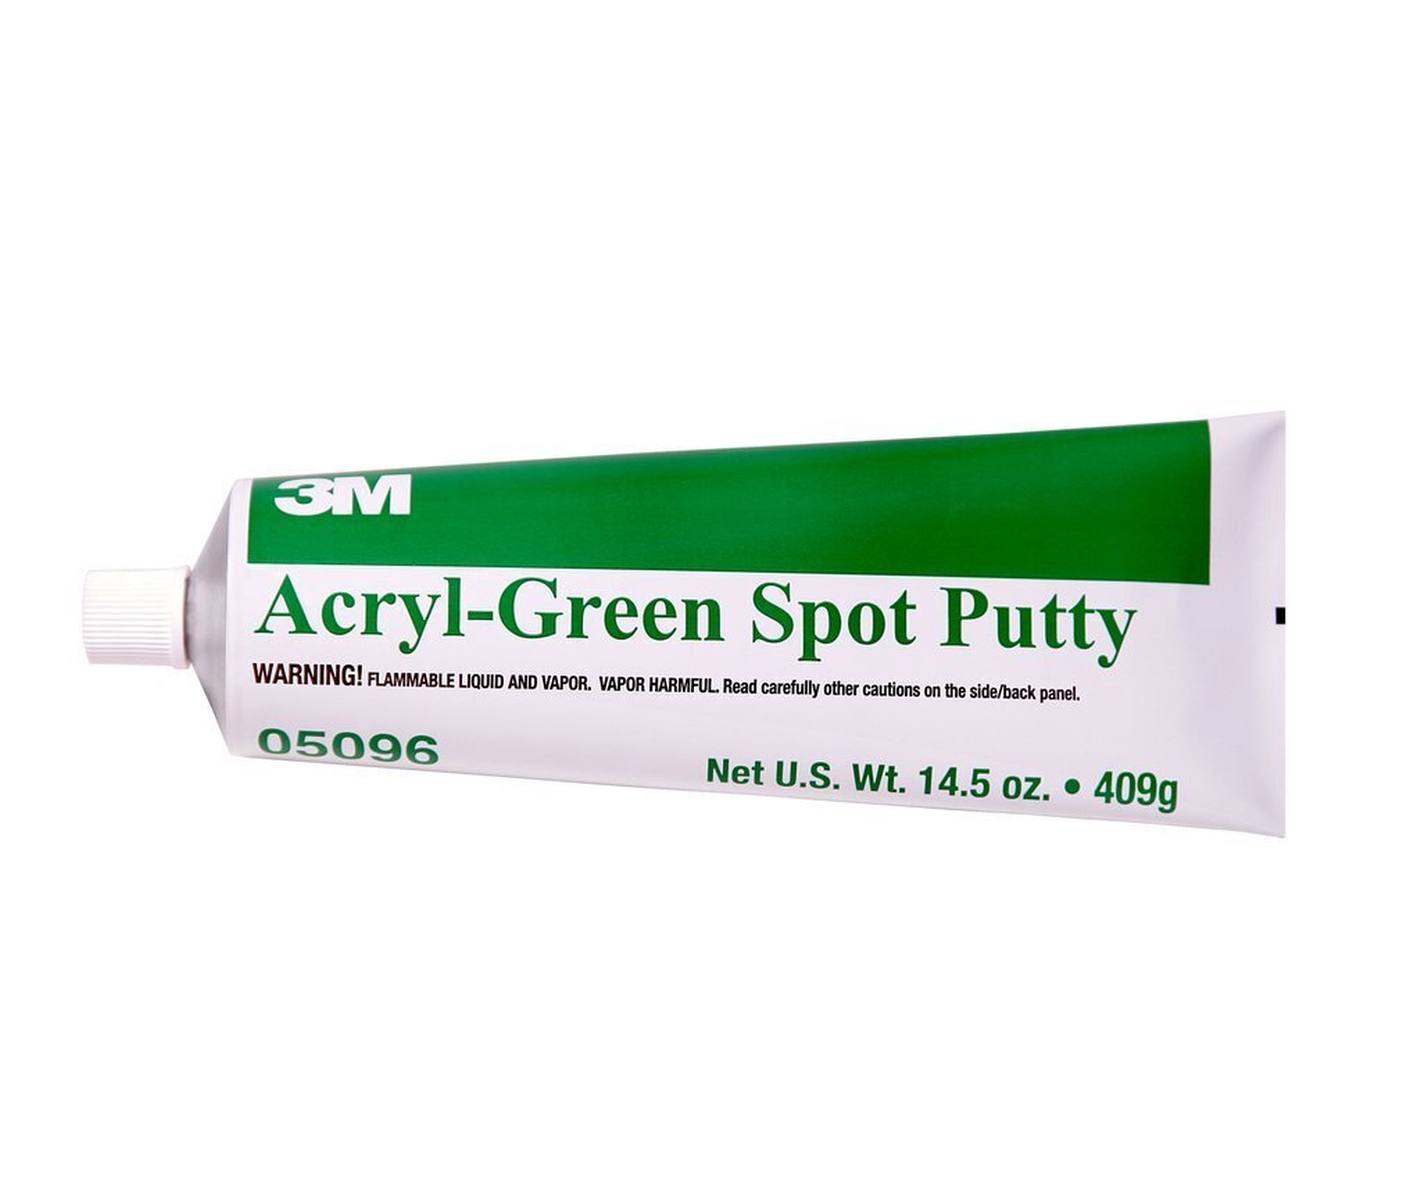 3M Acrylic Green Spot Putty, 409g